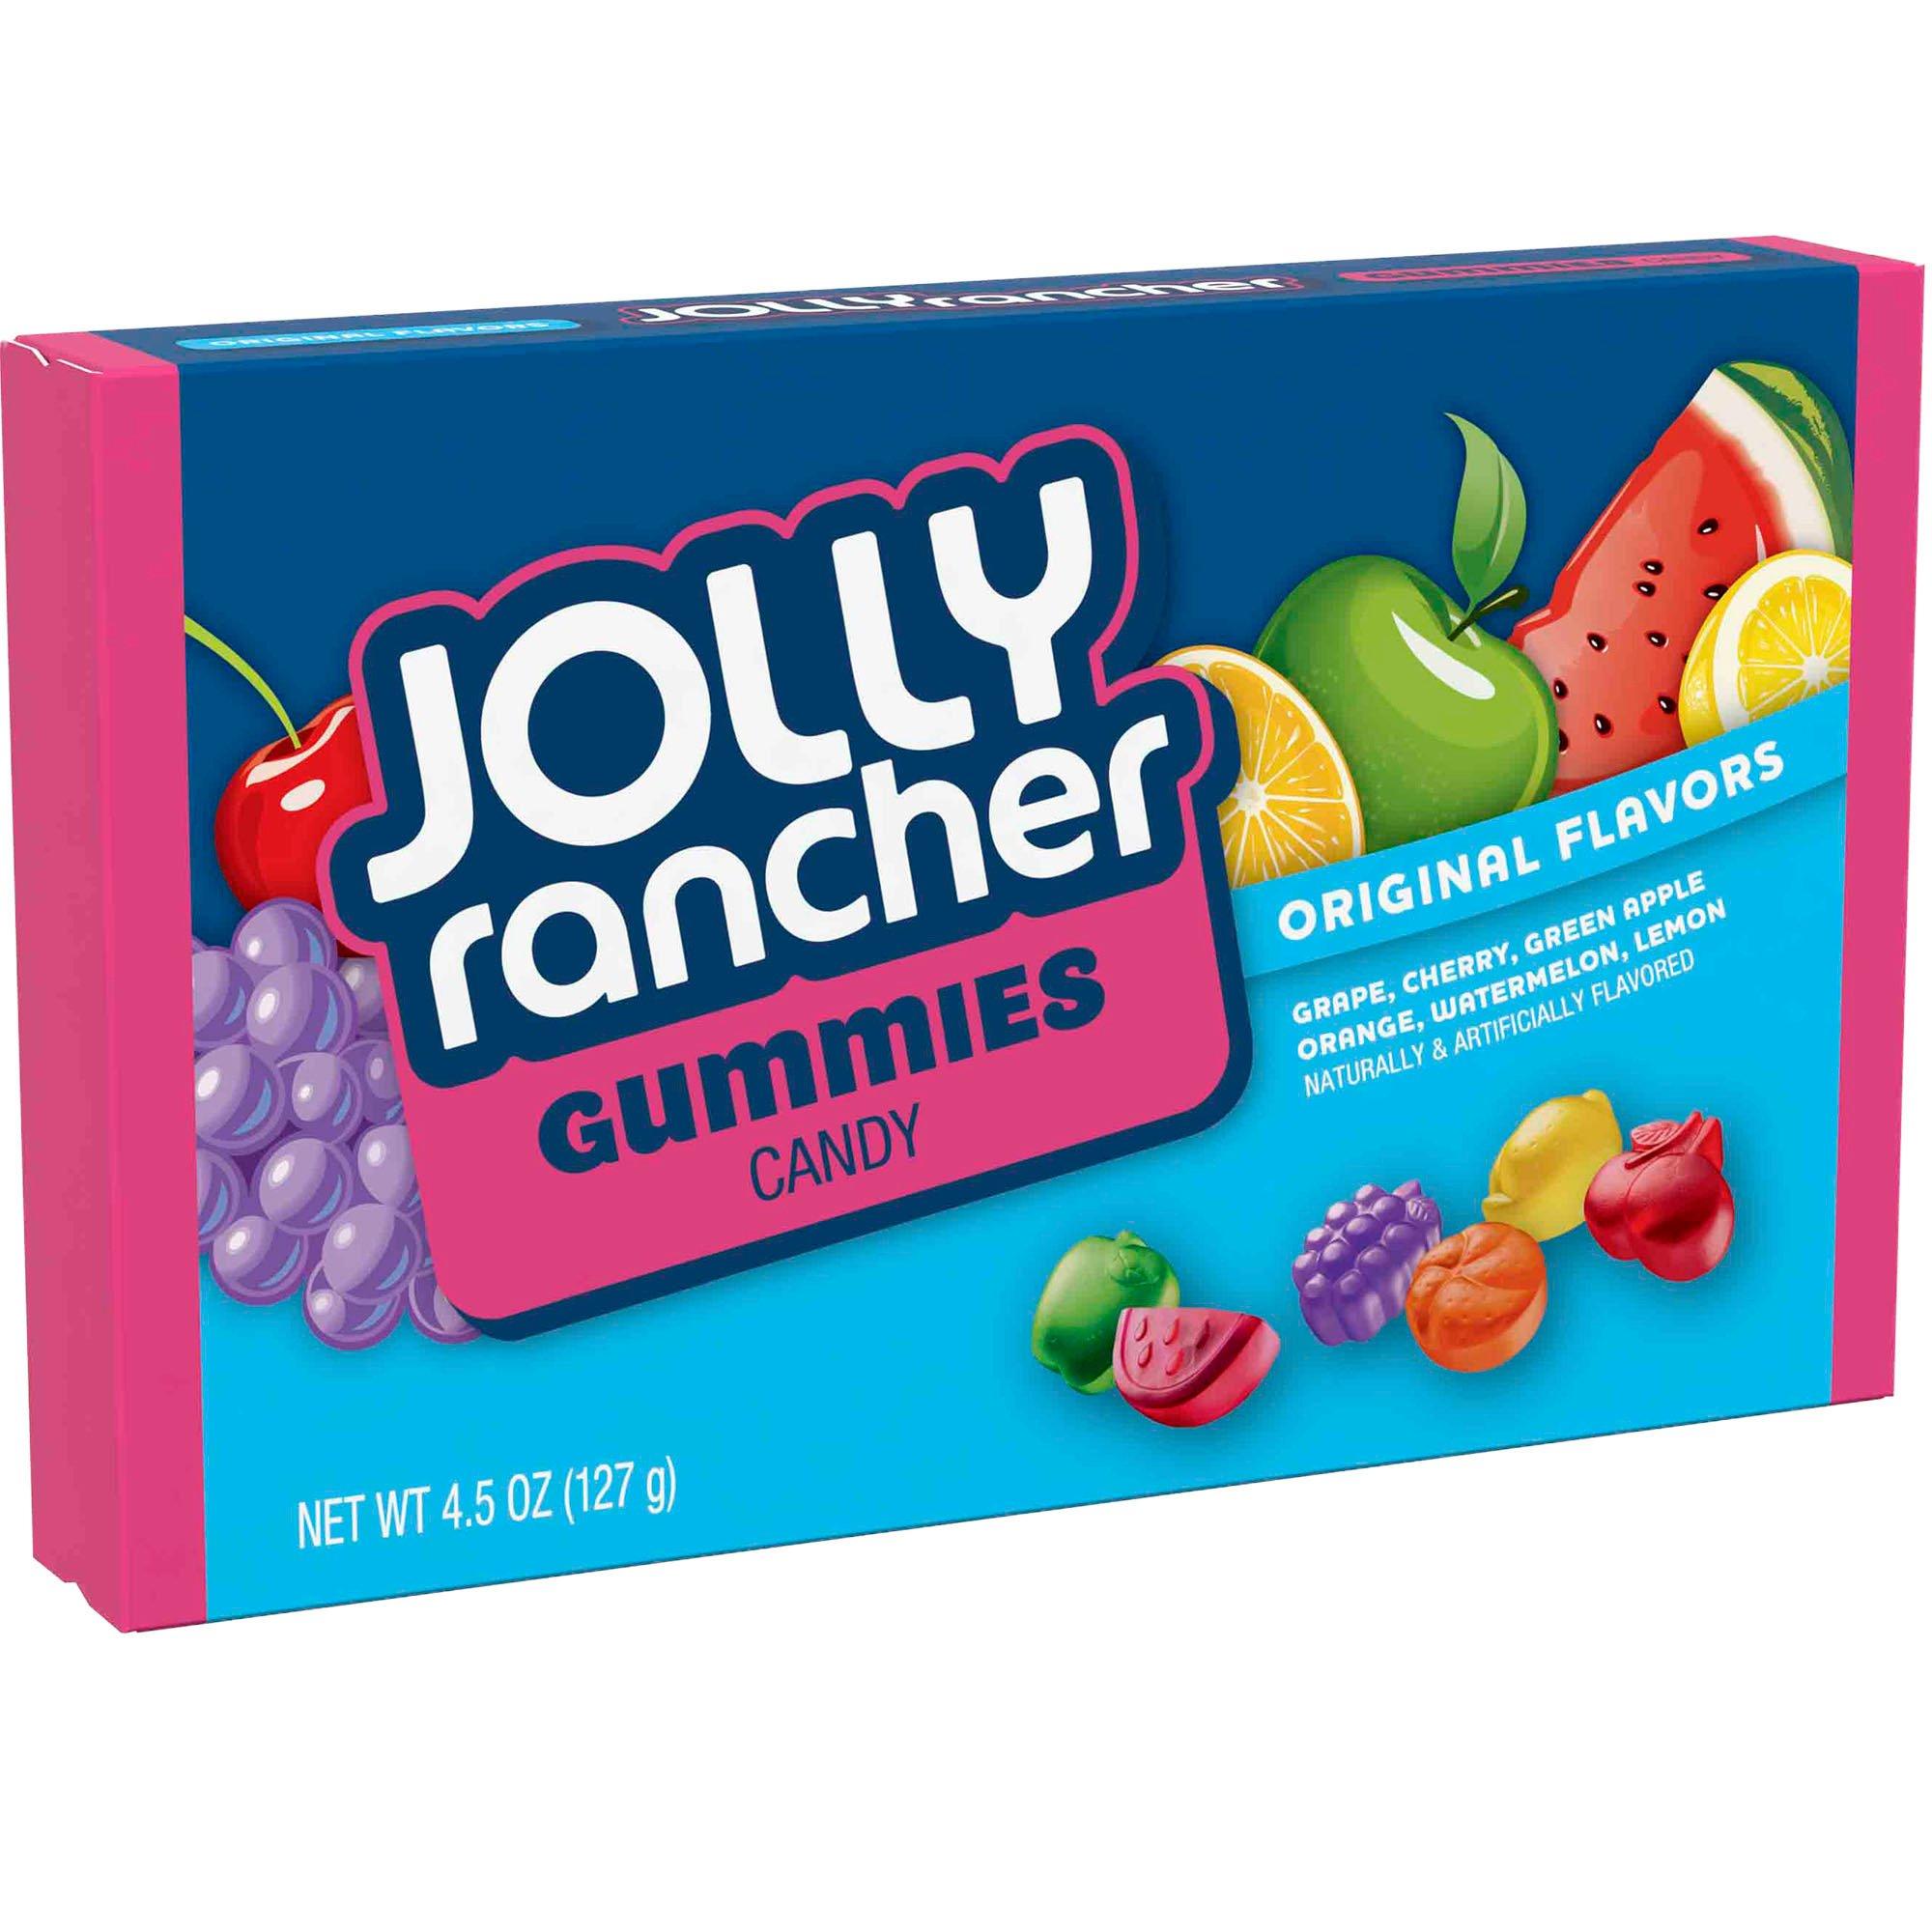 Jolly Rancher Gummies Candy Box, 3.5oz - Original Fruity Flavors